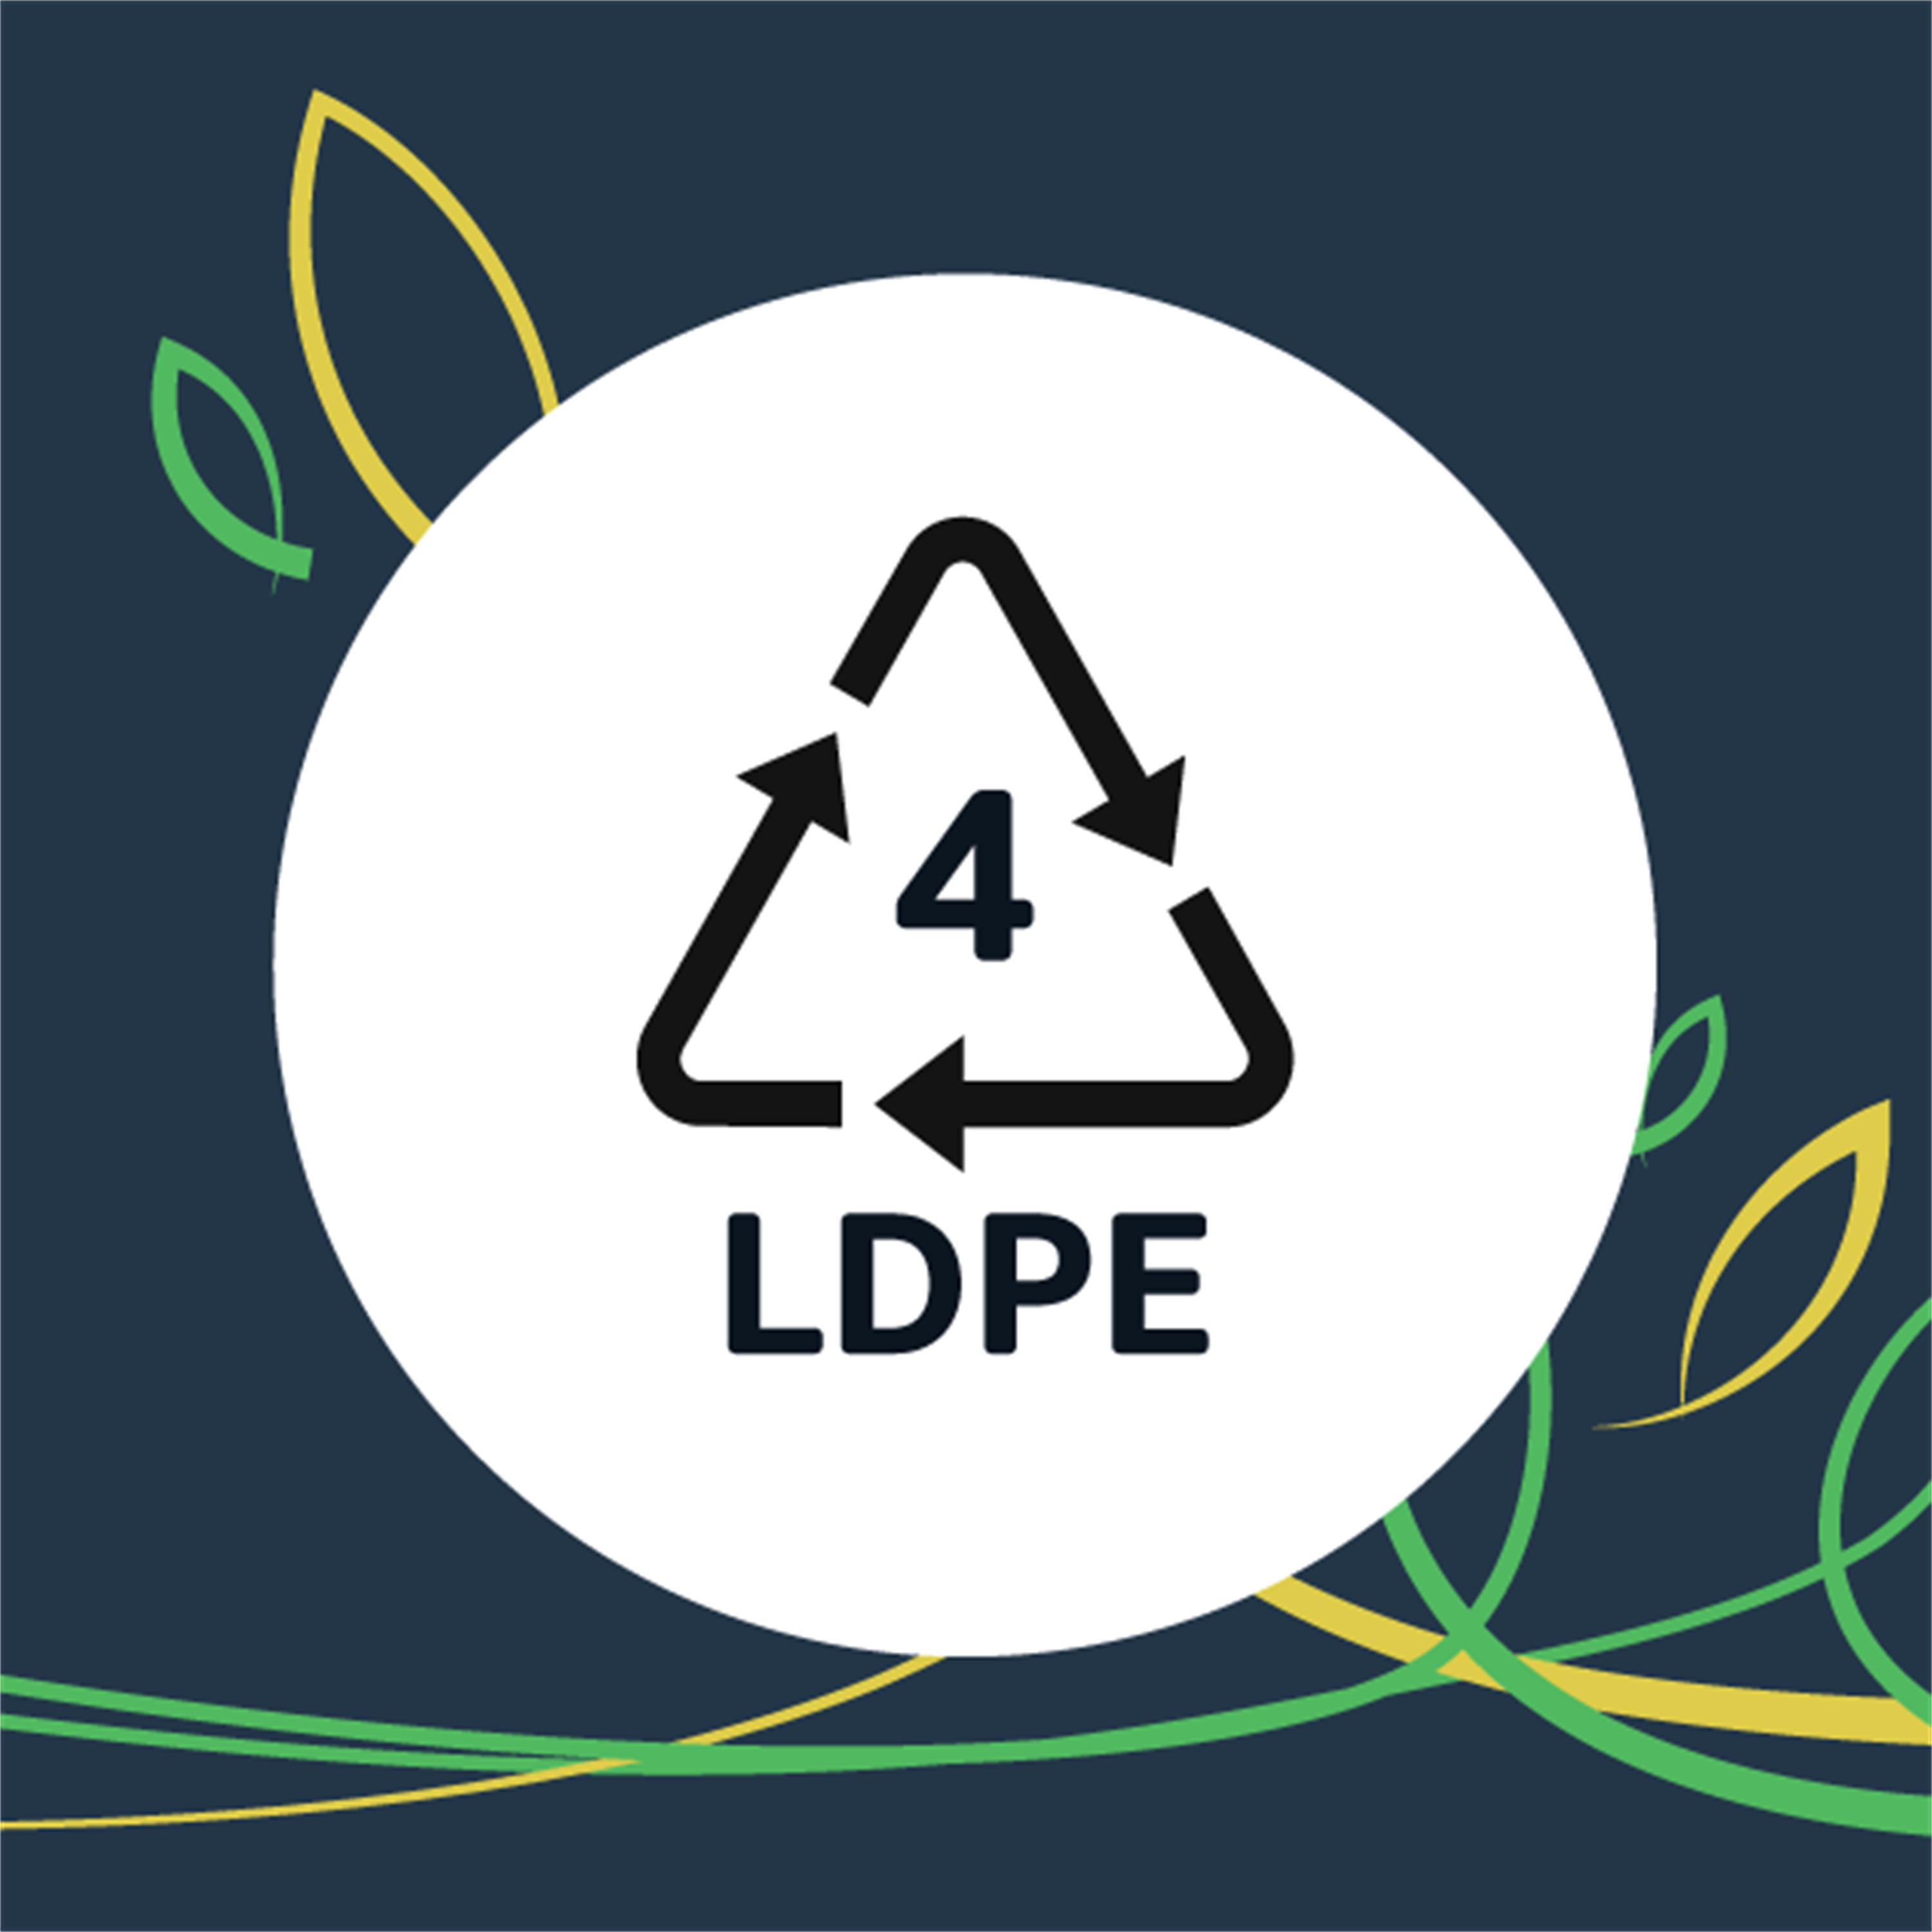 LDPE 4. Внешний вид LDPE. LDPE 4 значок. LDPE recyclable. Ldpe это